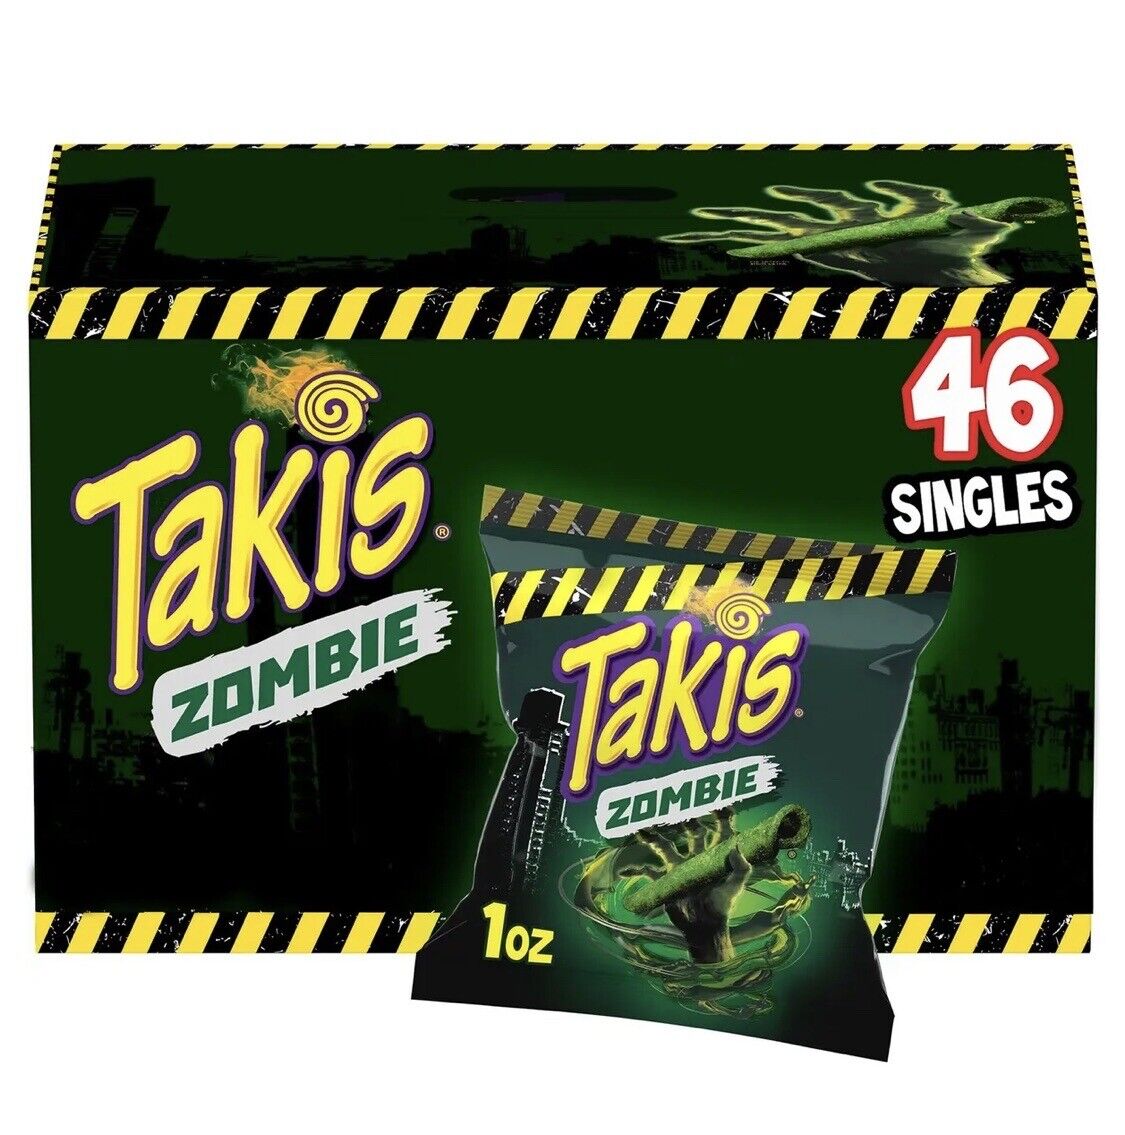 Wholesale Box of Takis Zombie 46 x 28g - Candy Mail UK